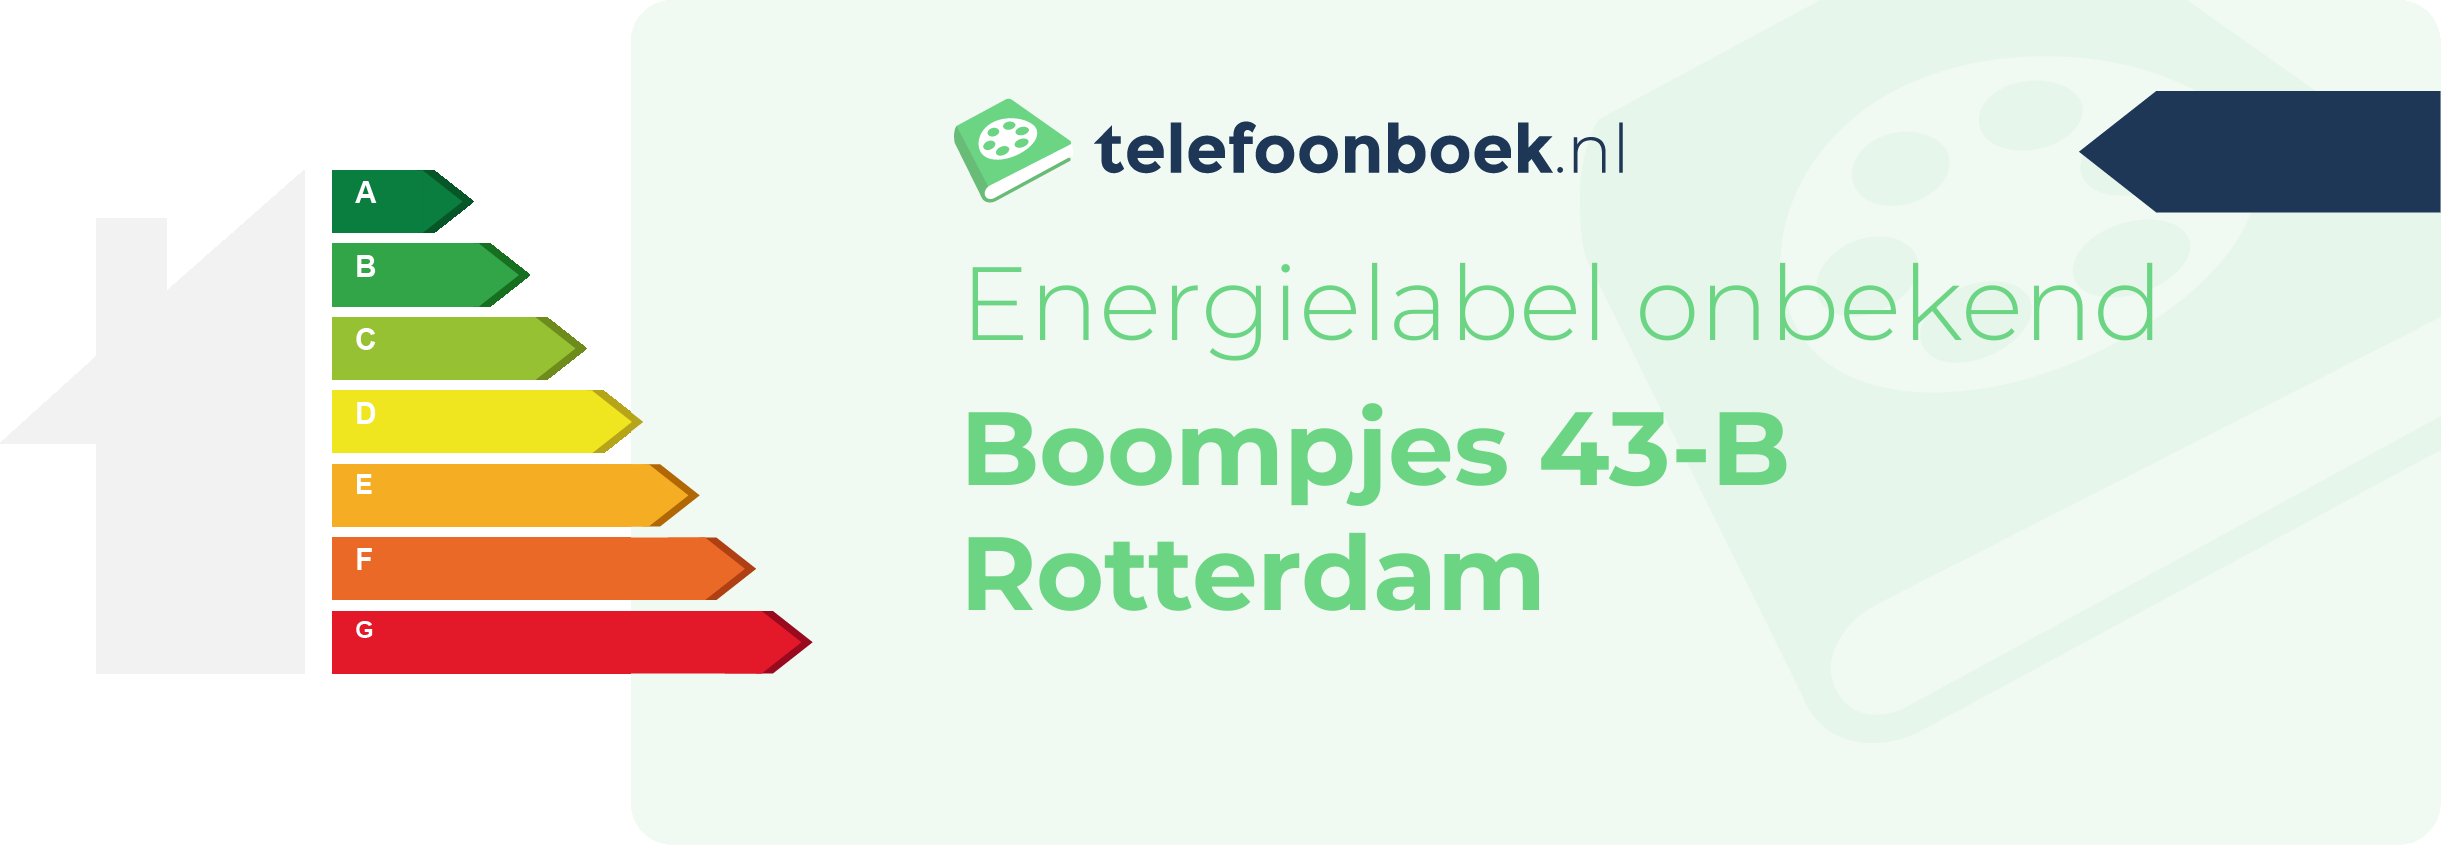 Energielabel Boompjes 43-B Rotterdam